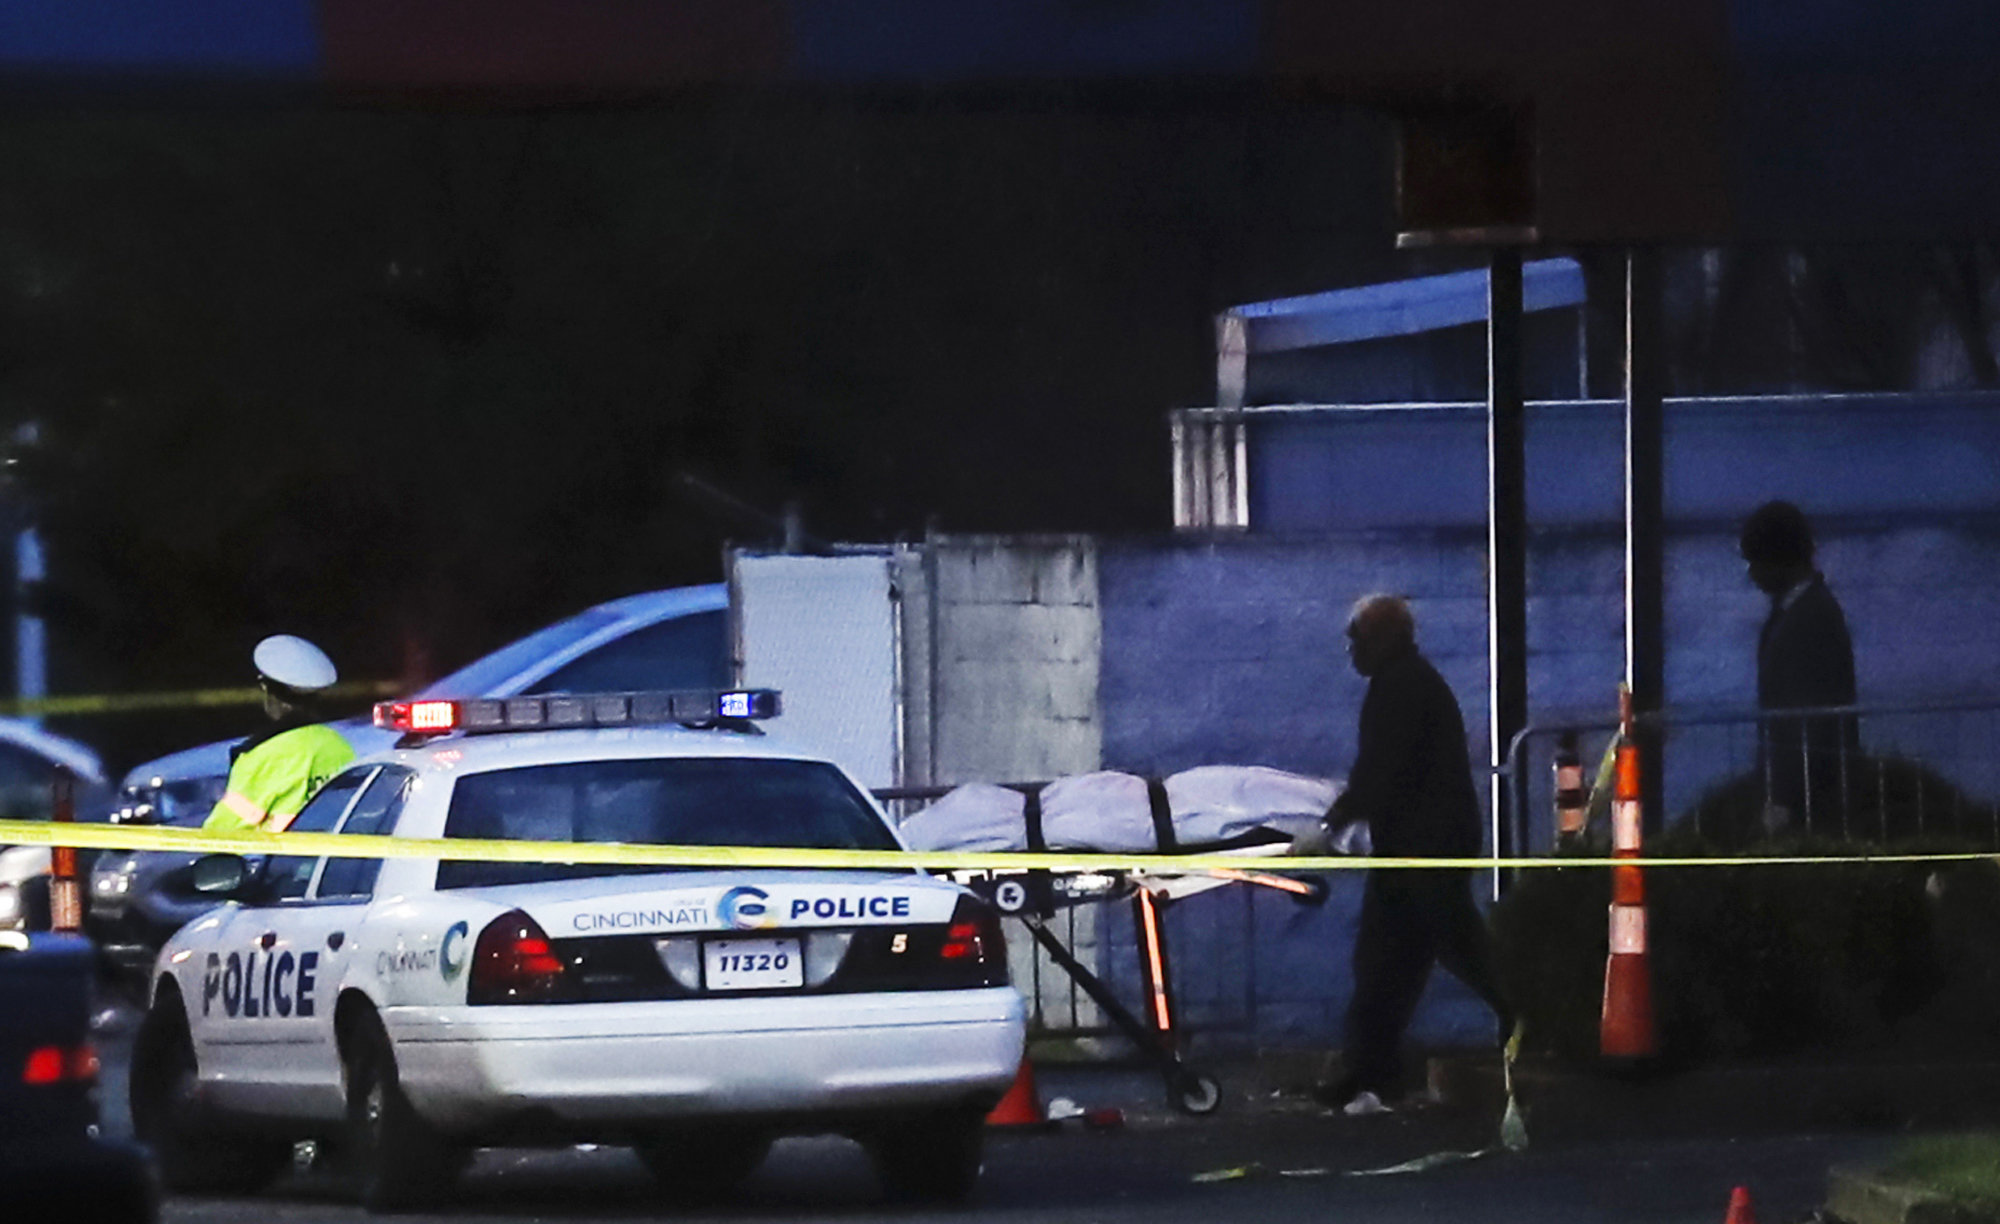 Cincinnati night club shooting: Police searching for suspects